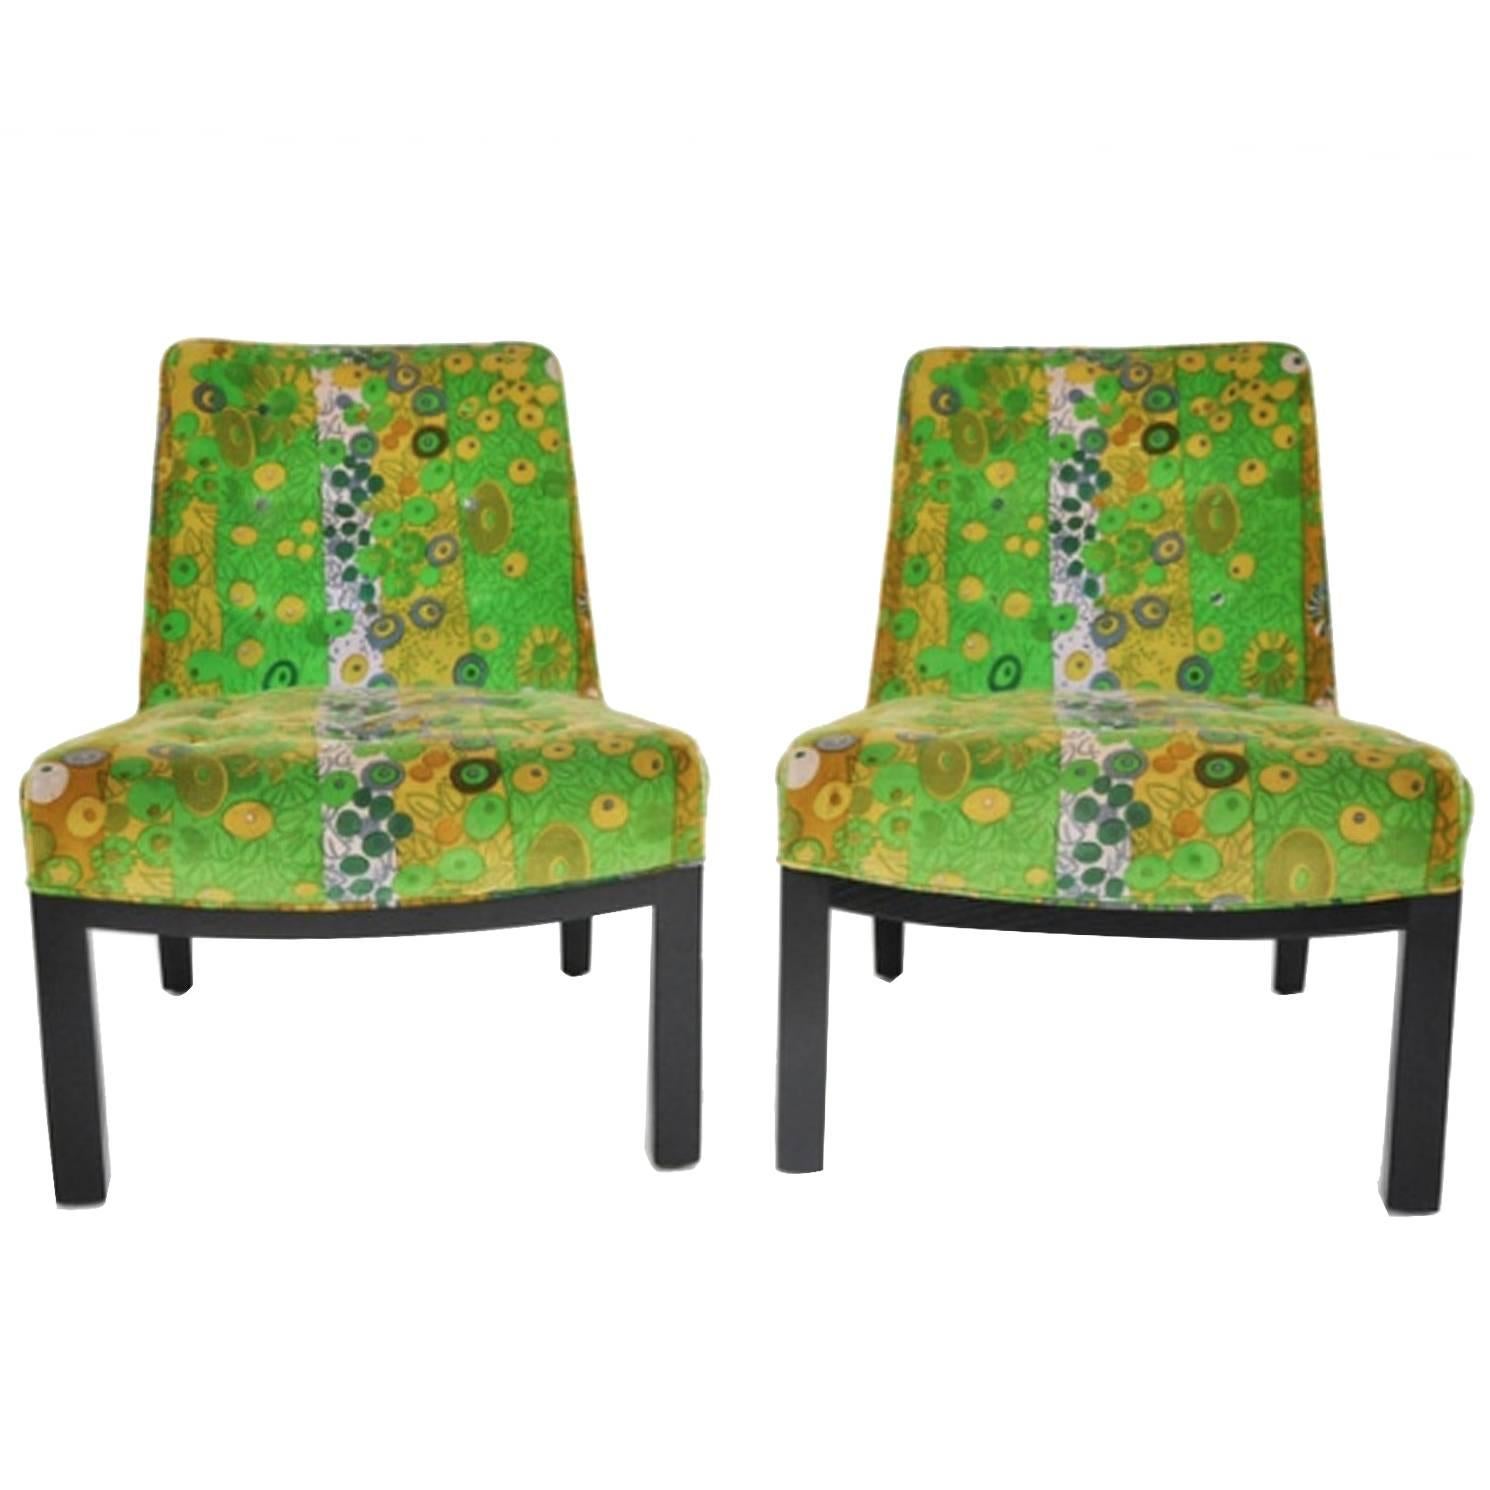 Very Rare Original Jack Lenor Larsen Fabric on Edward Wormley's Slipper Chairs For Sale